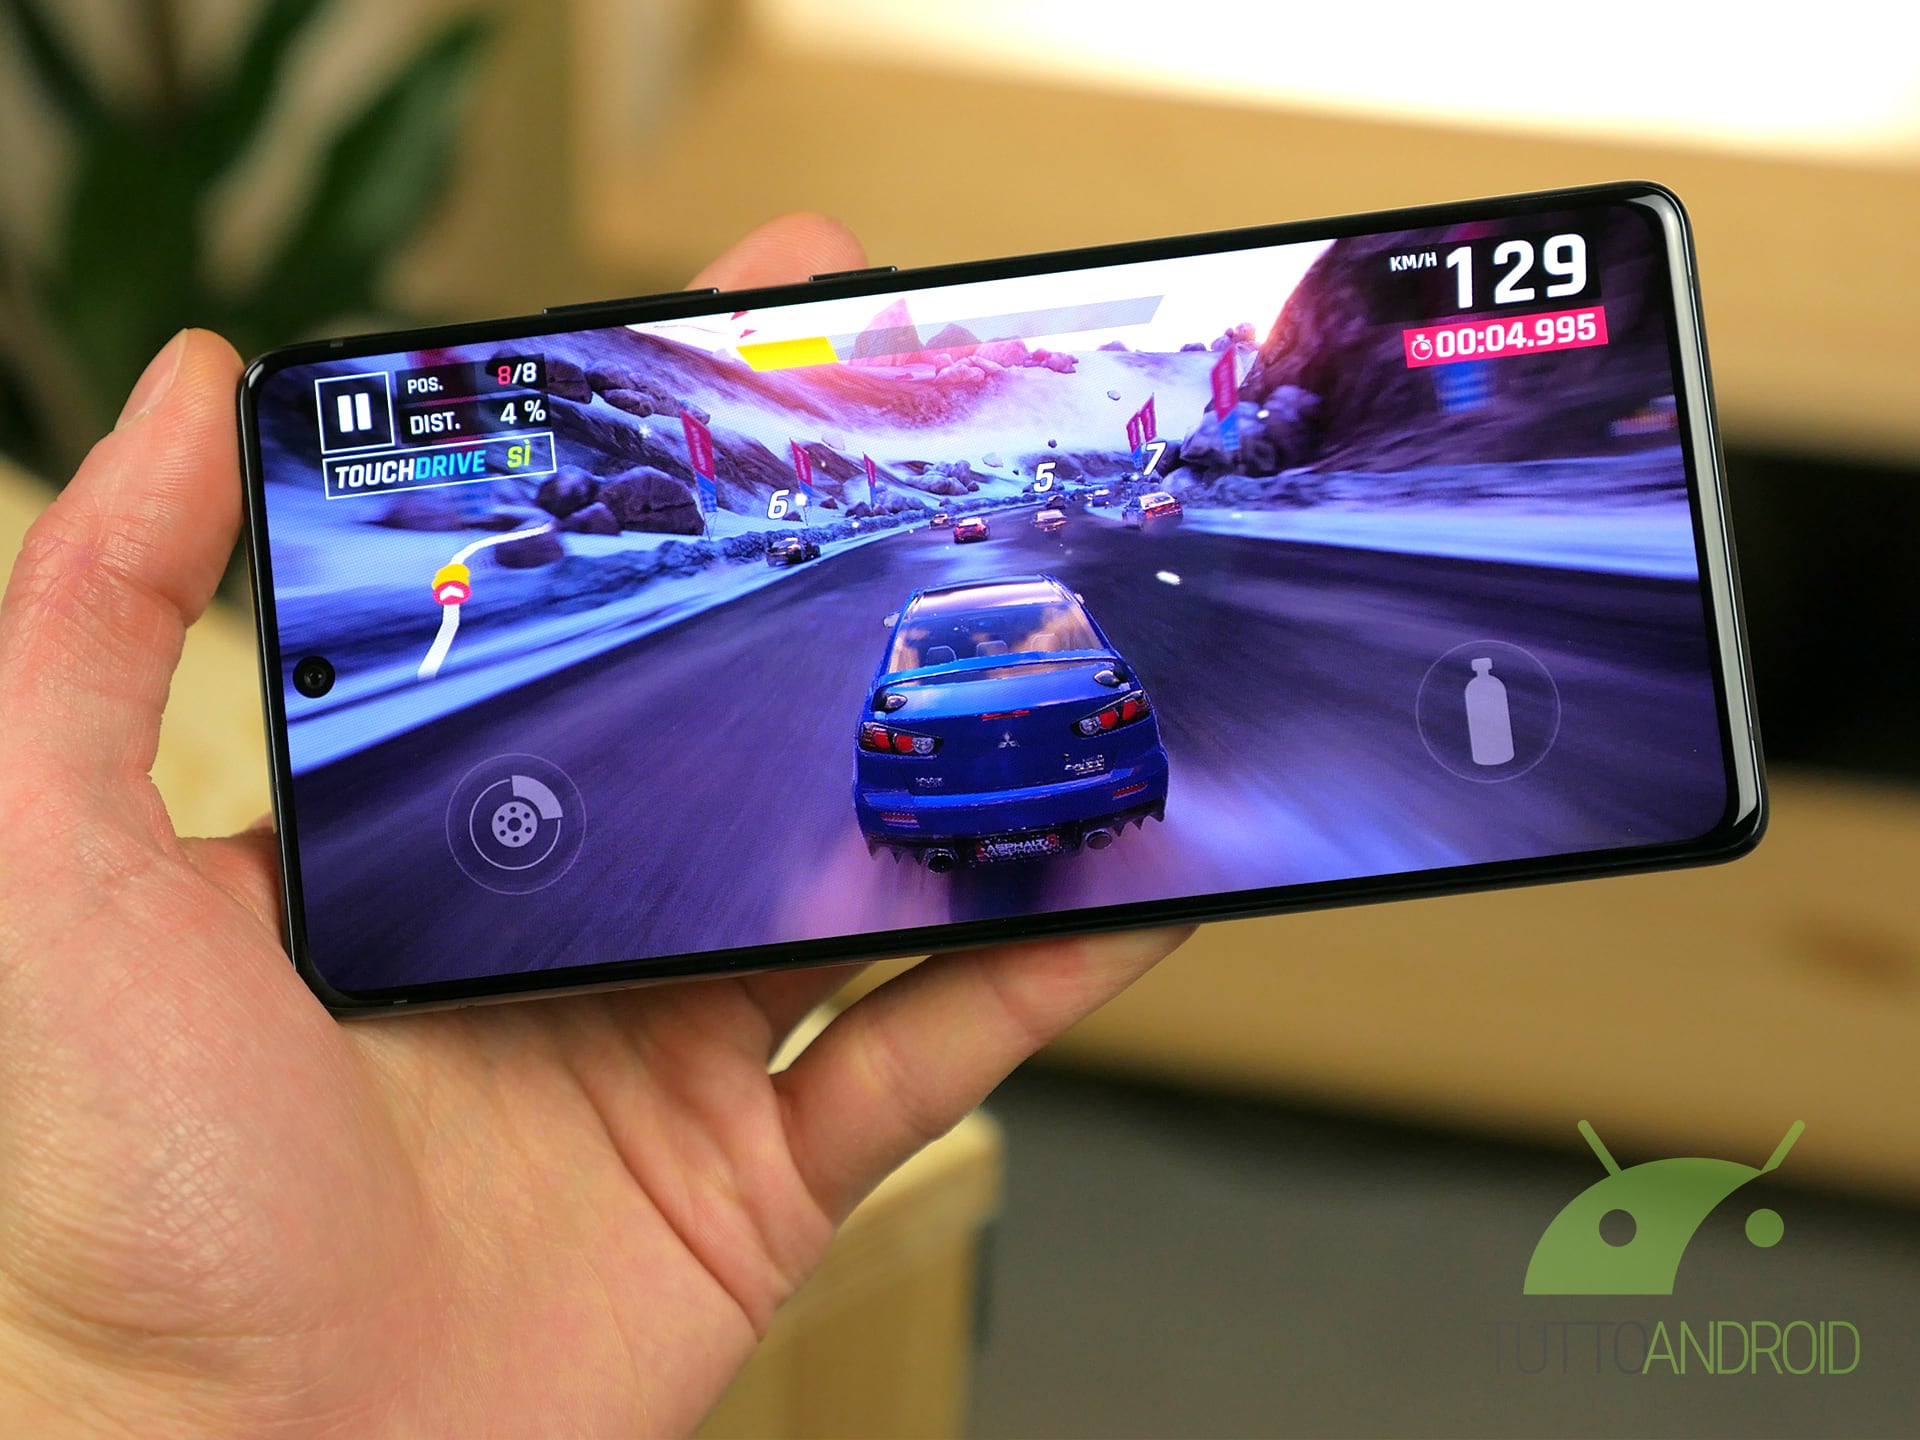 Samsung Galaxy Trò chơi S10 Lite